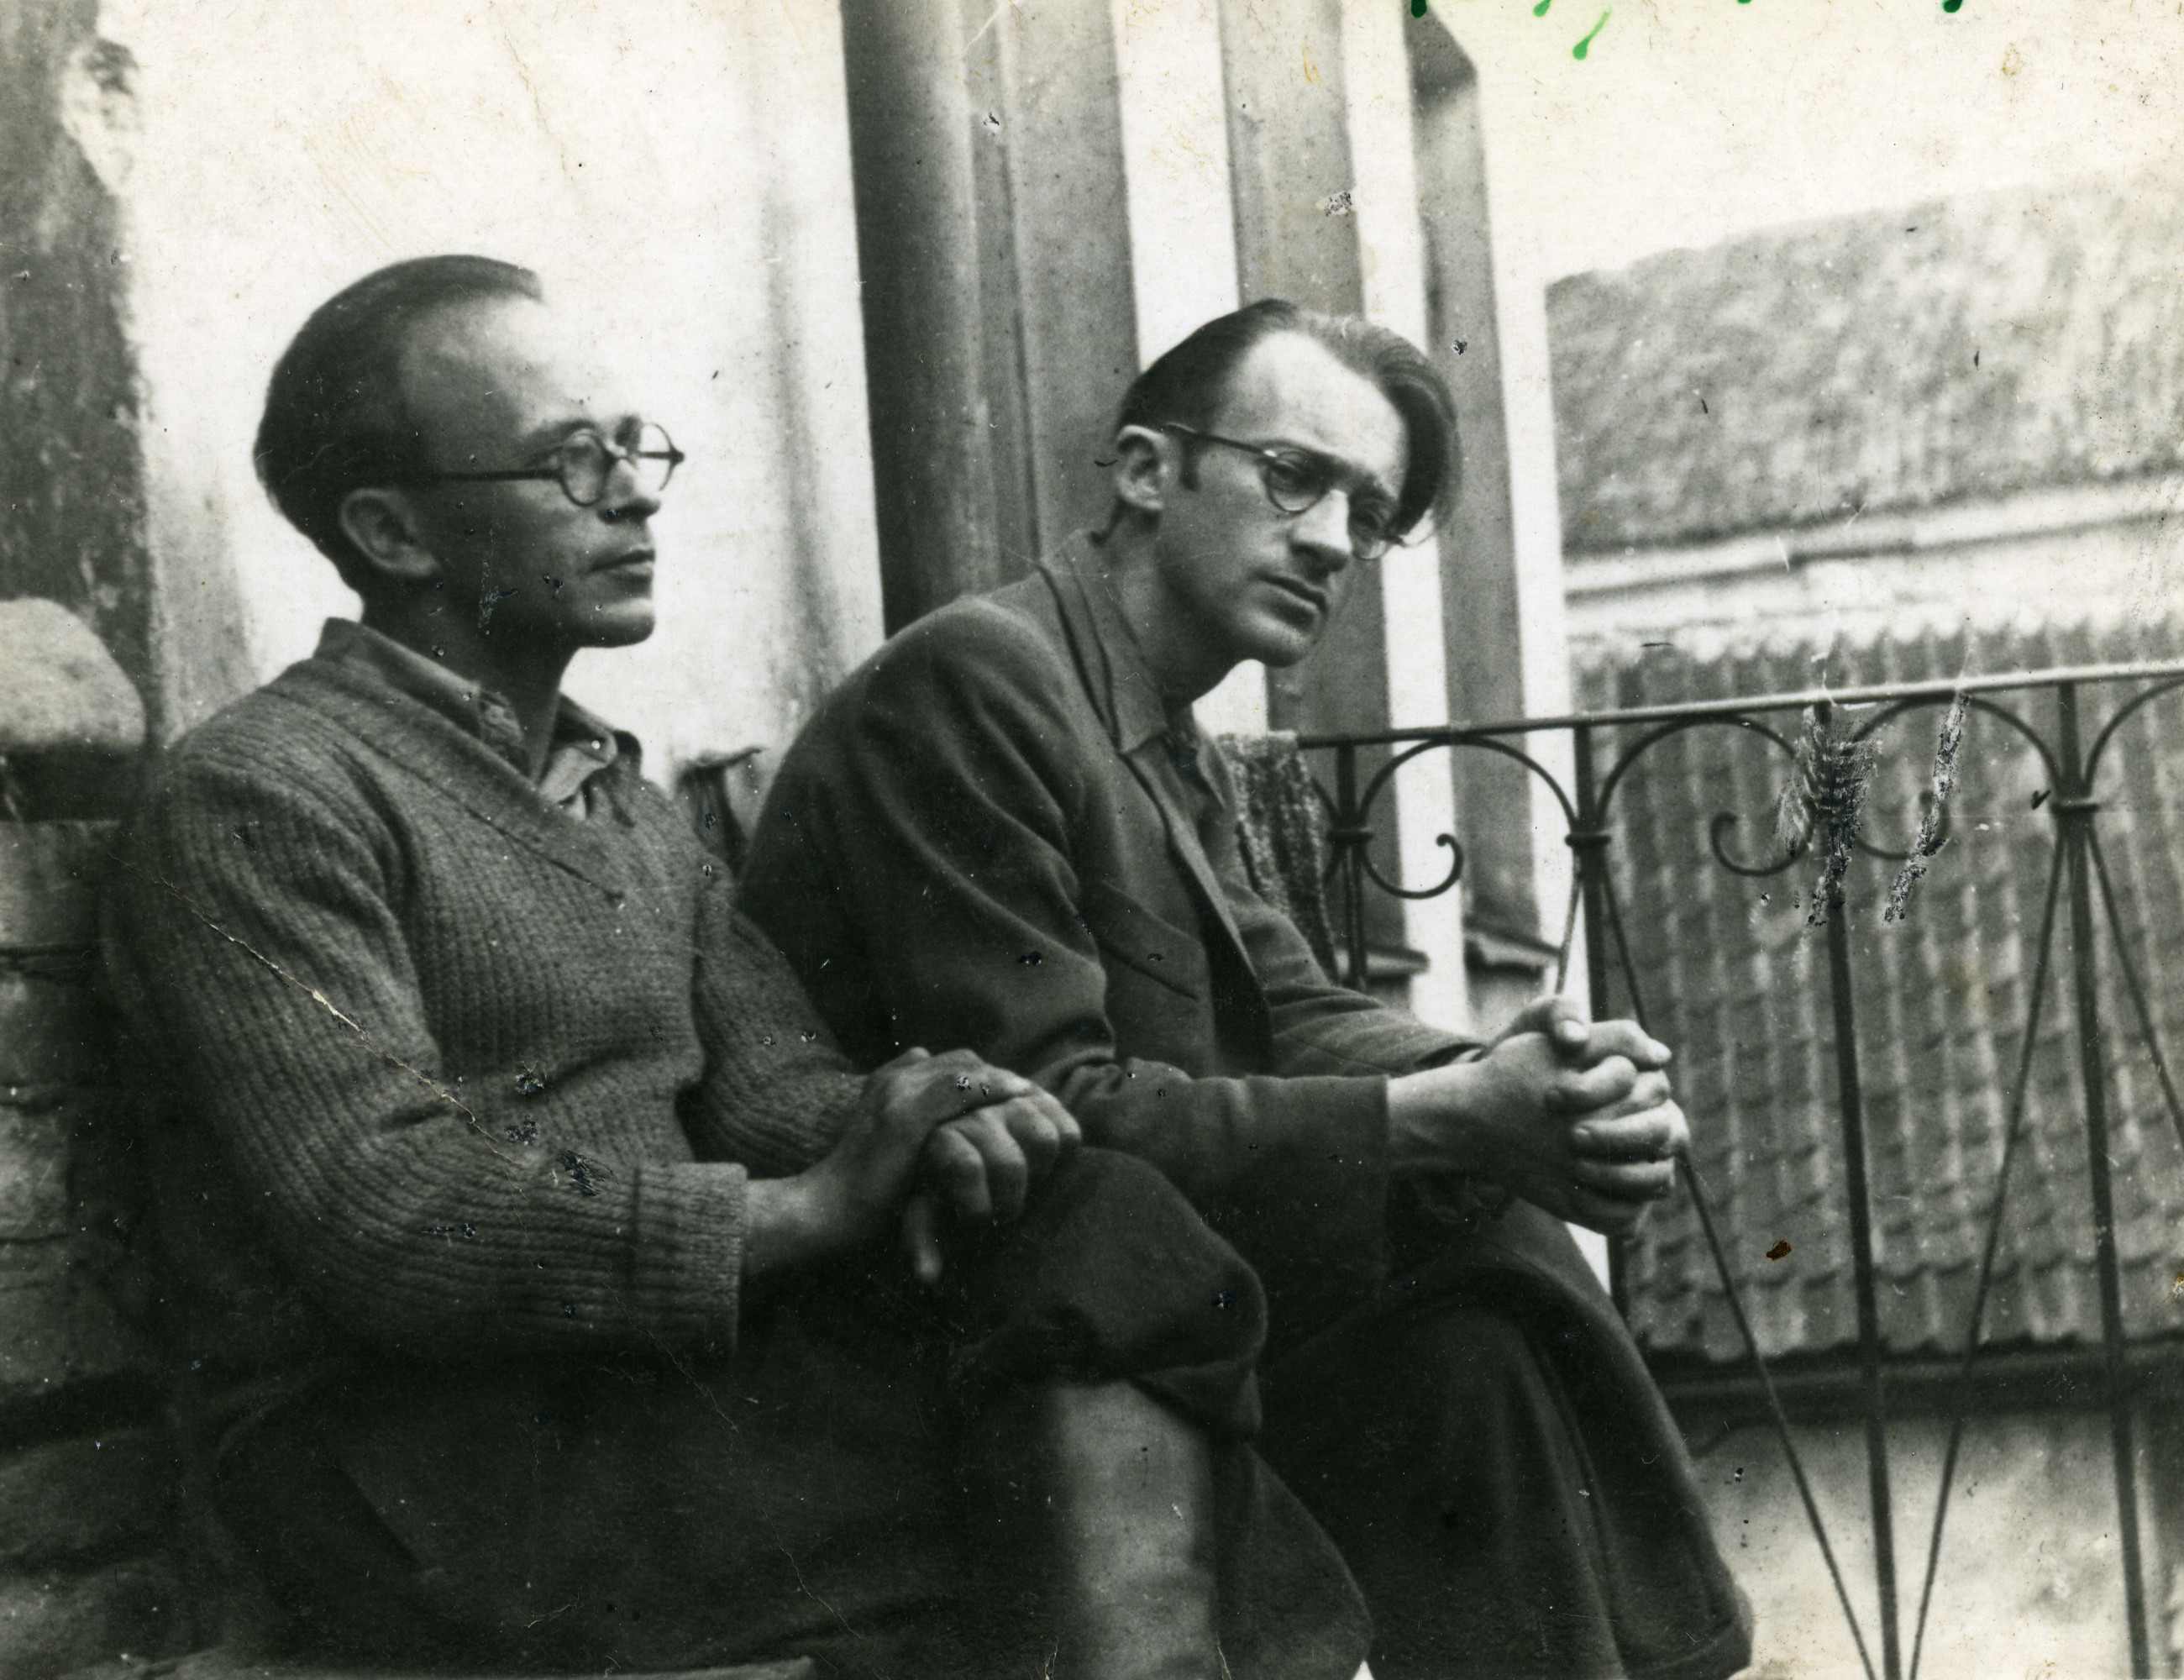 Avraham Sutzkever (right) and his friend Shmerke Kaczerginski sit on a terrace within the Vilna ghetto.